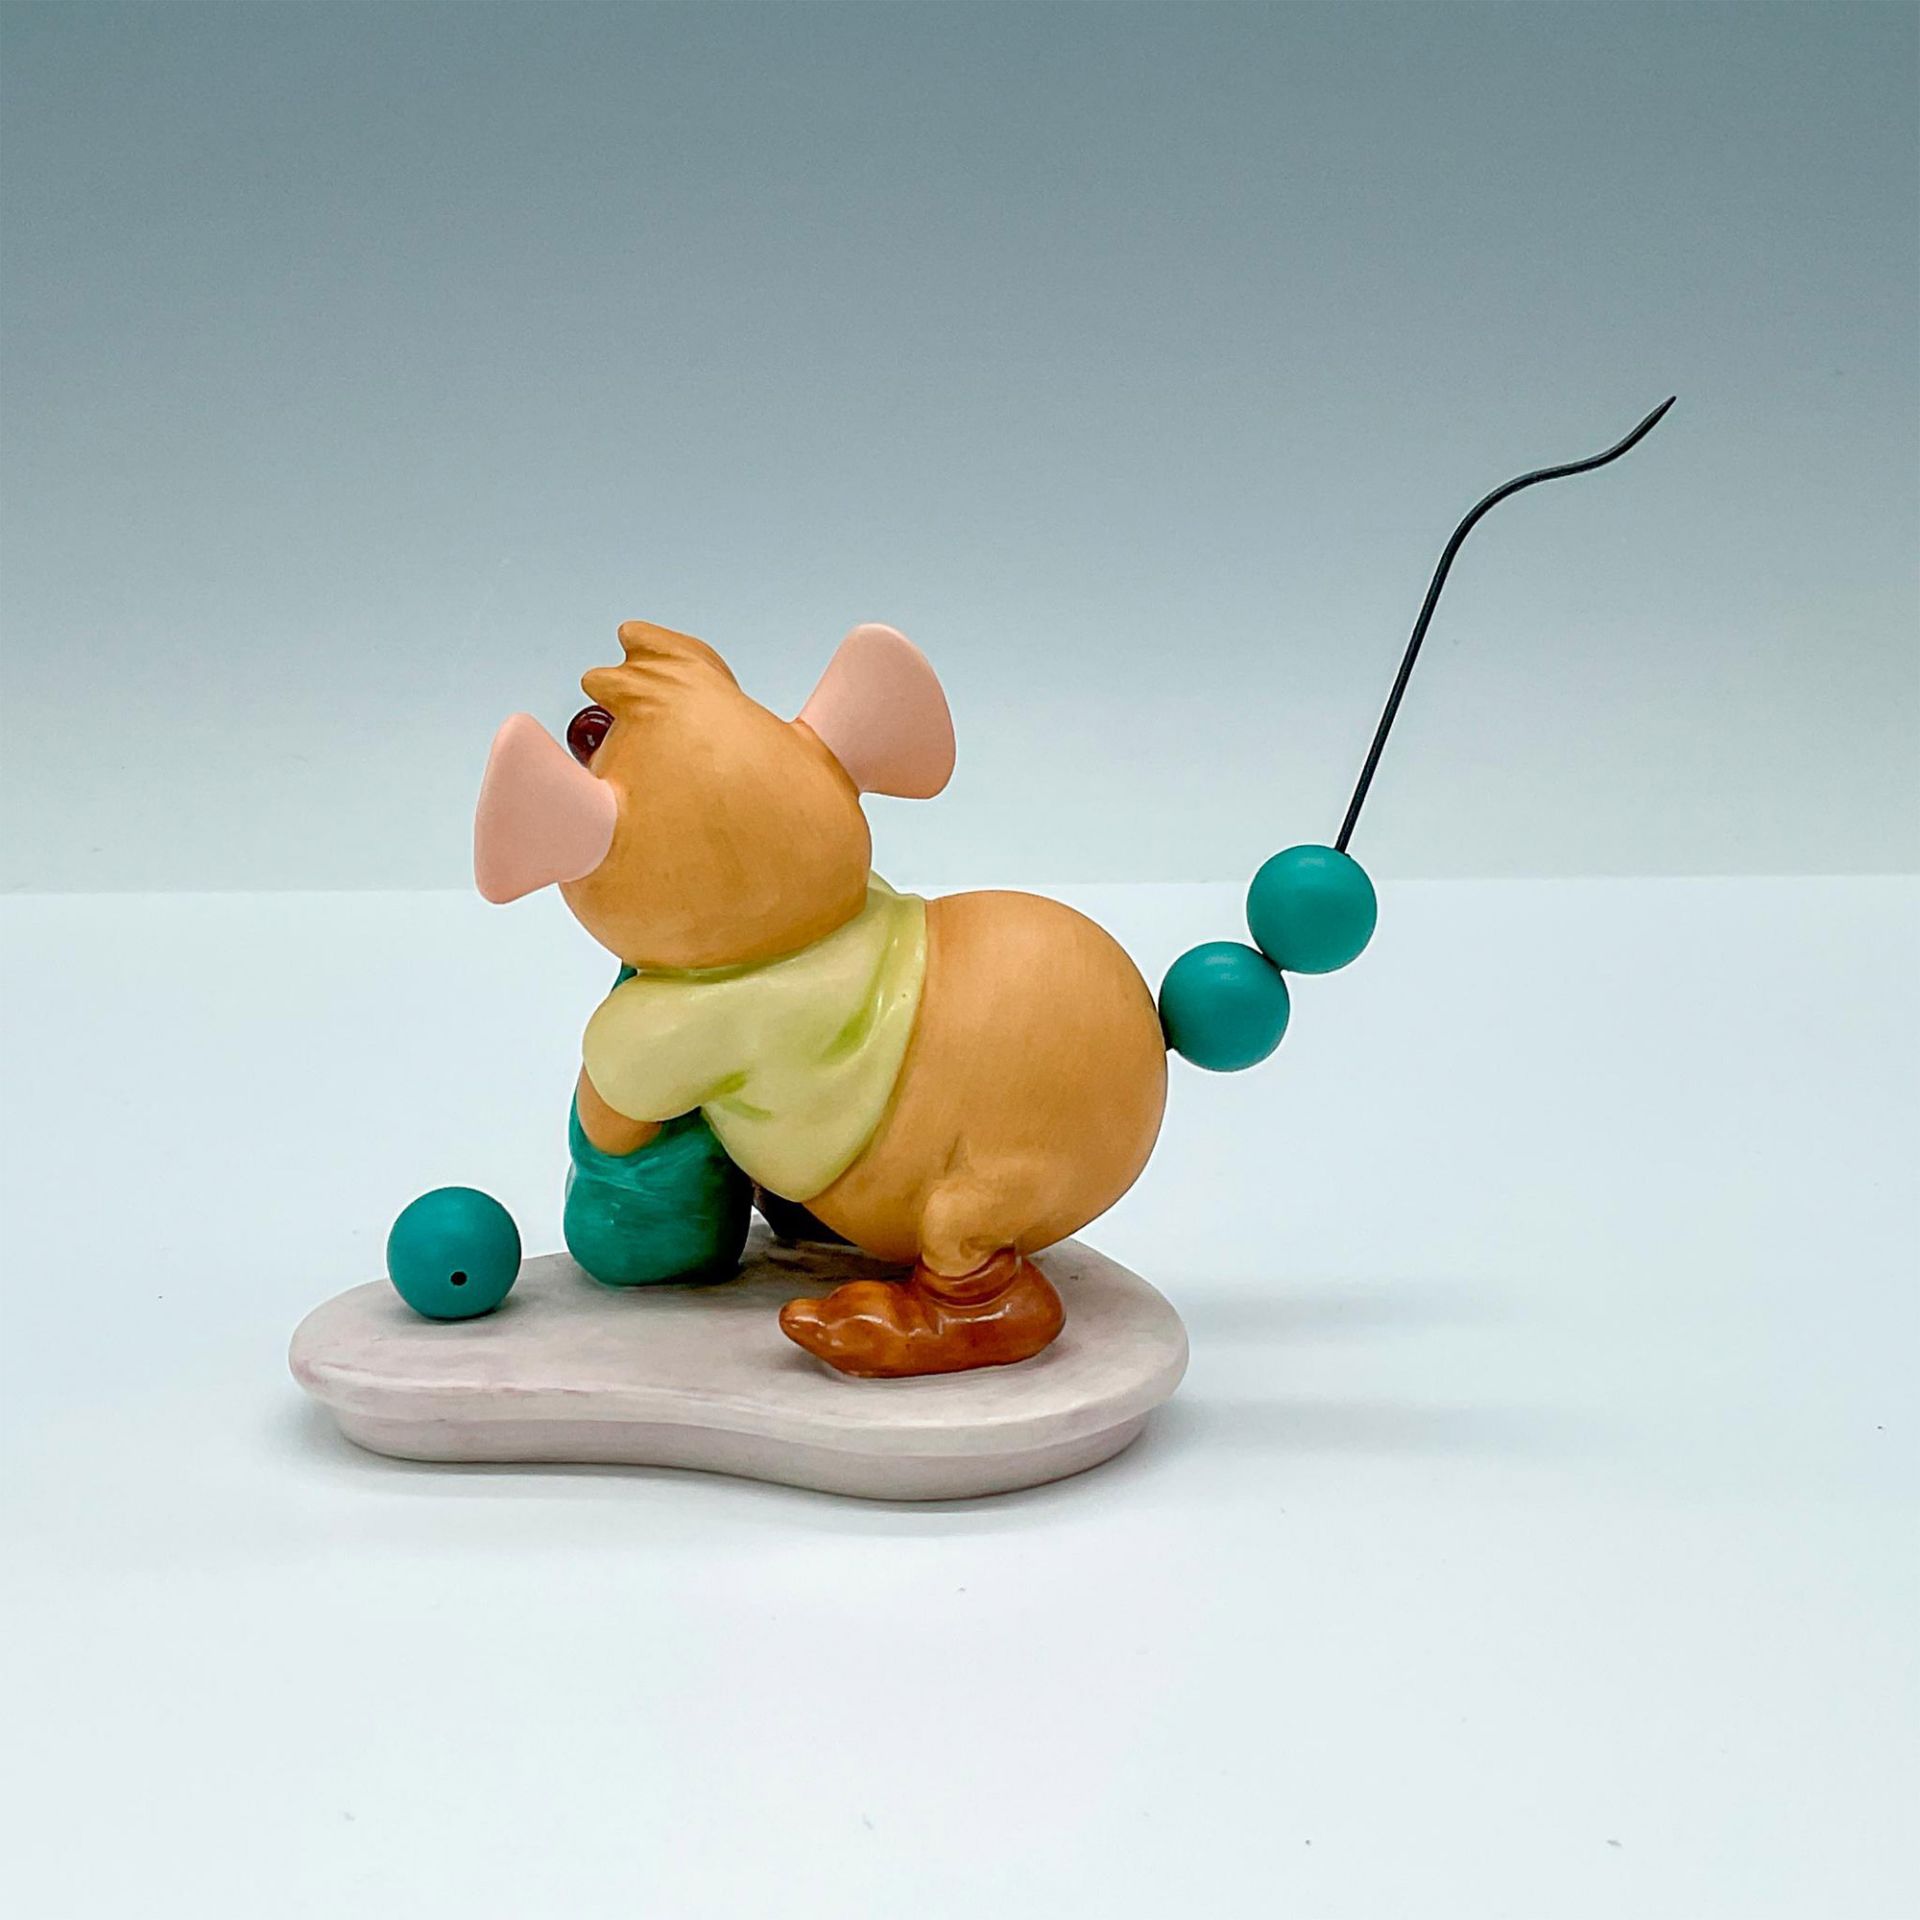 Walt Disney Classics Collection Figurine, Gus - Image 2 of 4